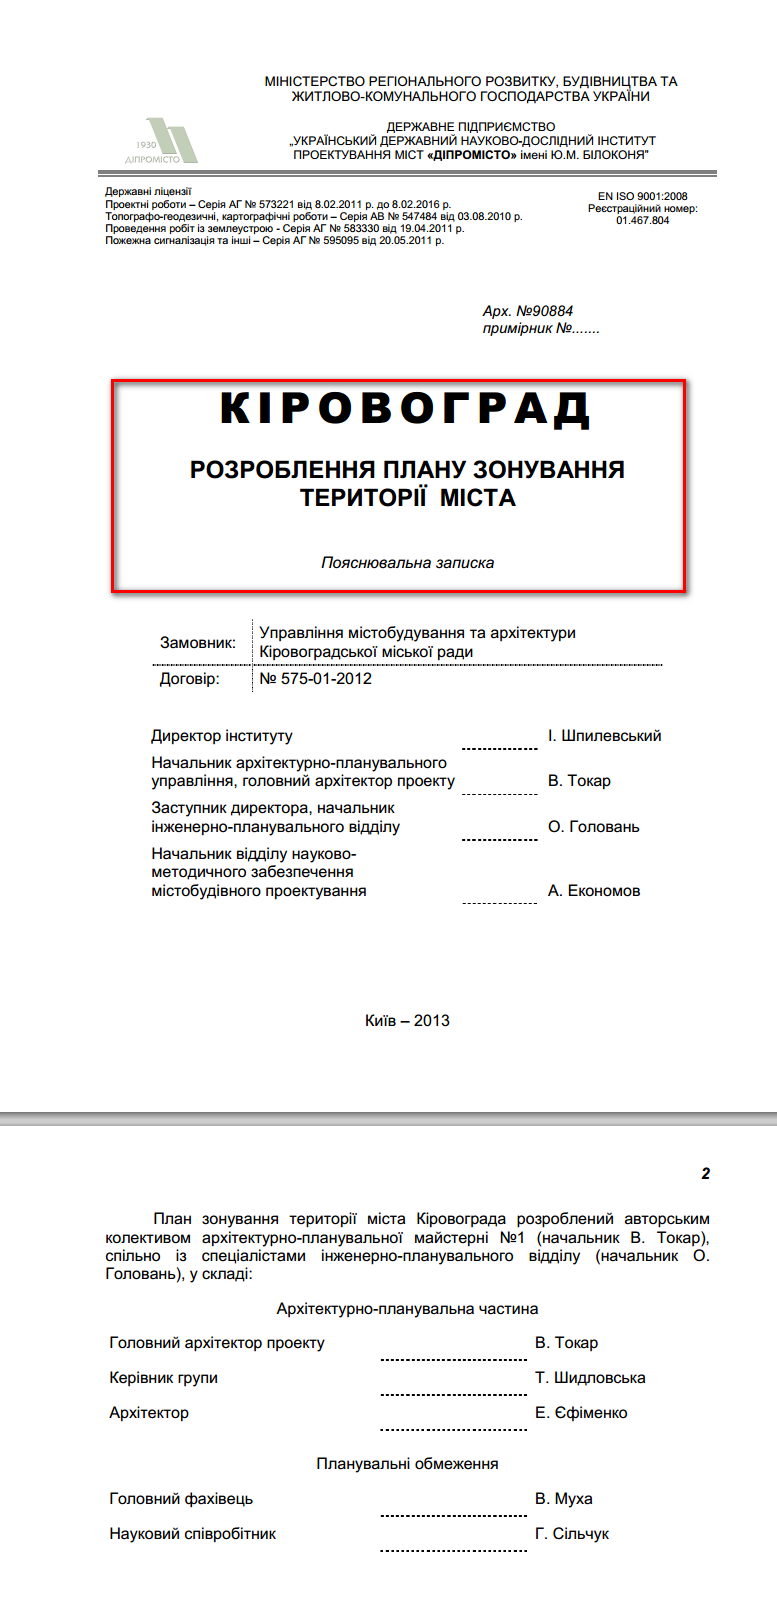 http://www.kr-rada.gov.ua/files/content/files/PZ-2013-20131127172635.pdf